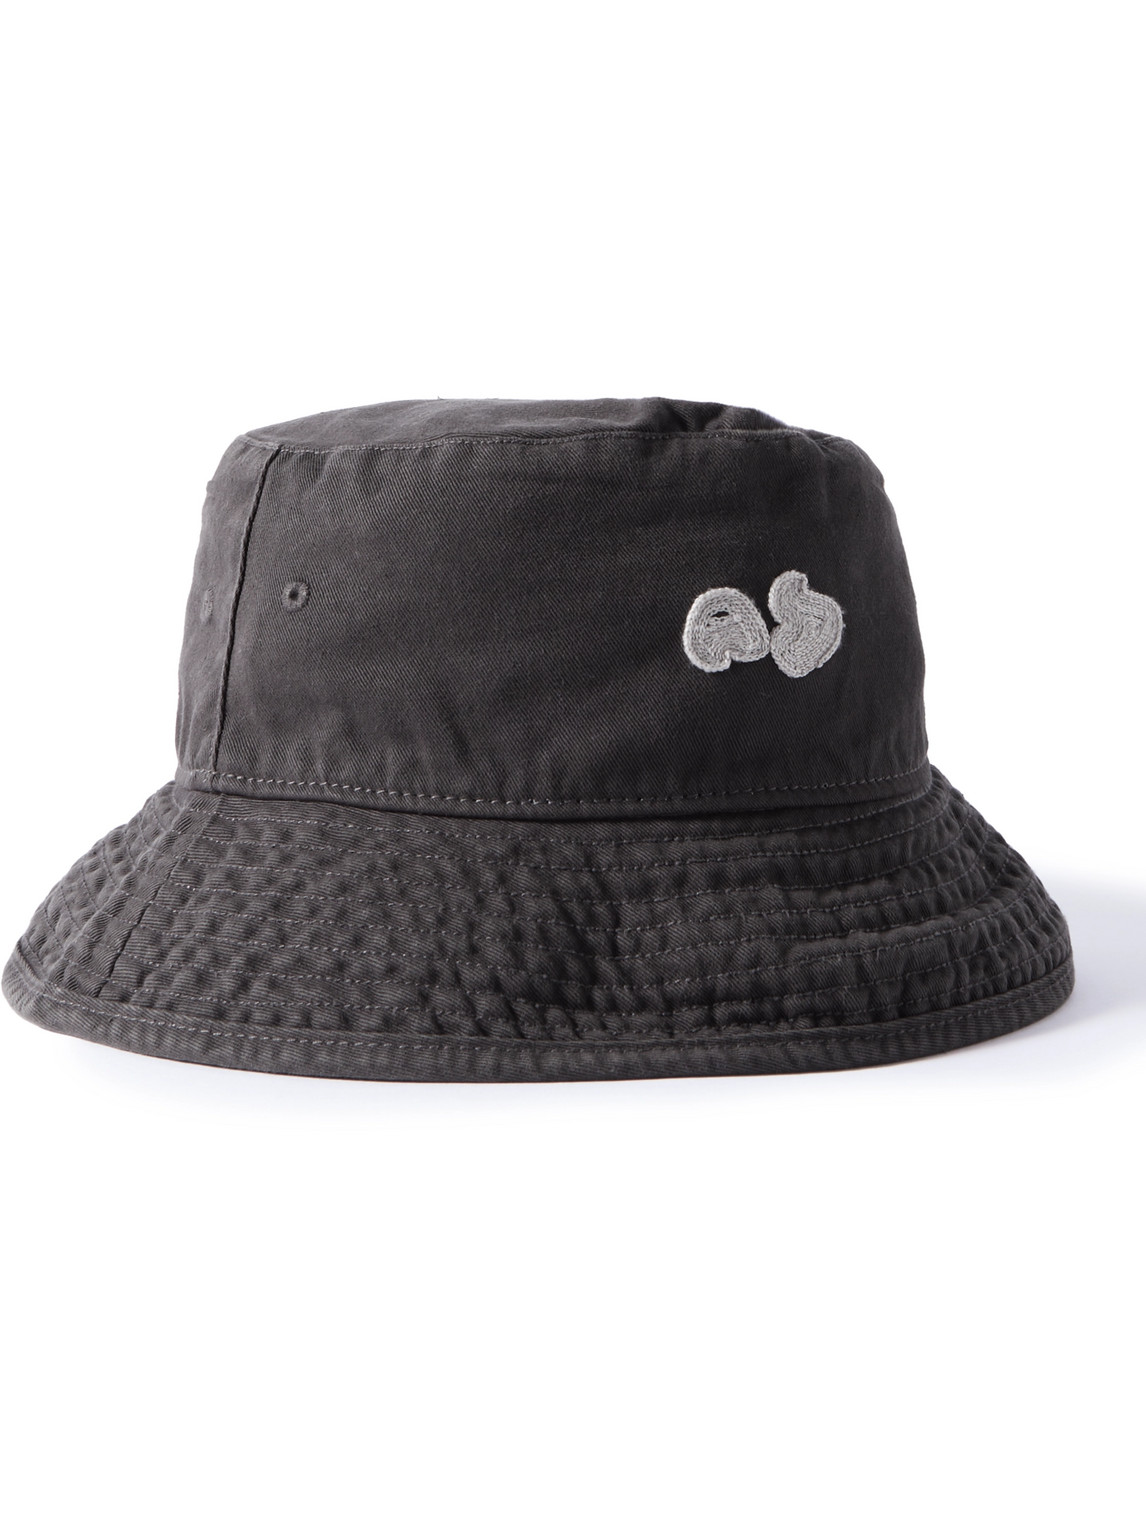 Acne Studios - Logo-Appliquéd Garment-Dyed Cotton-Twill Bucket Hat - Men - Gray - S/M